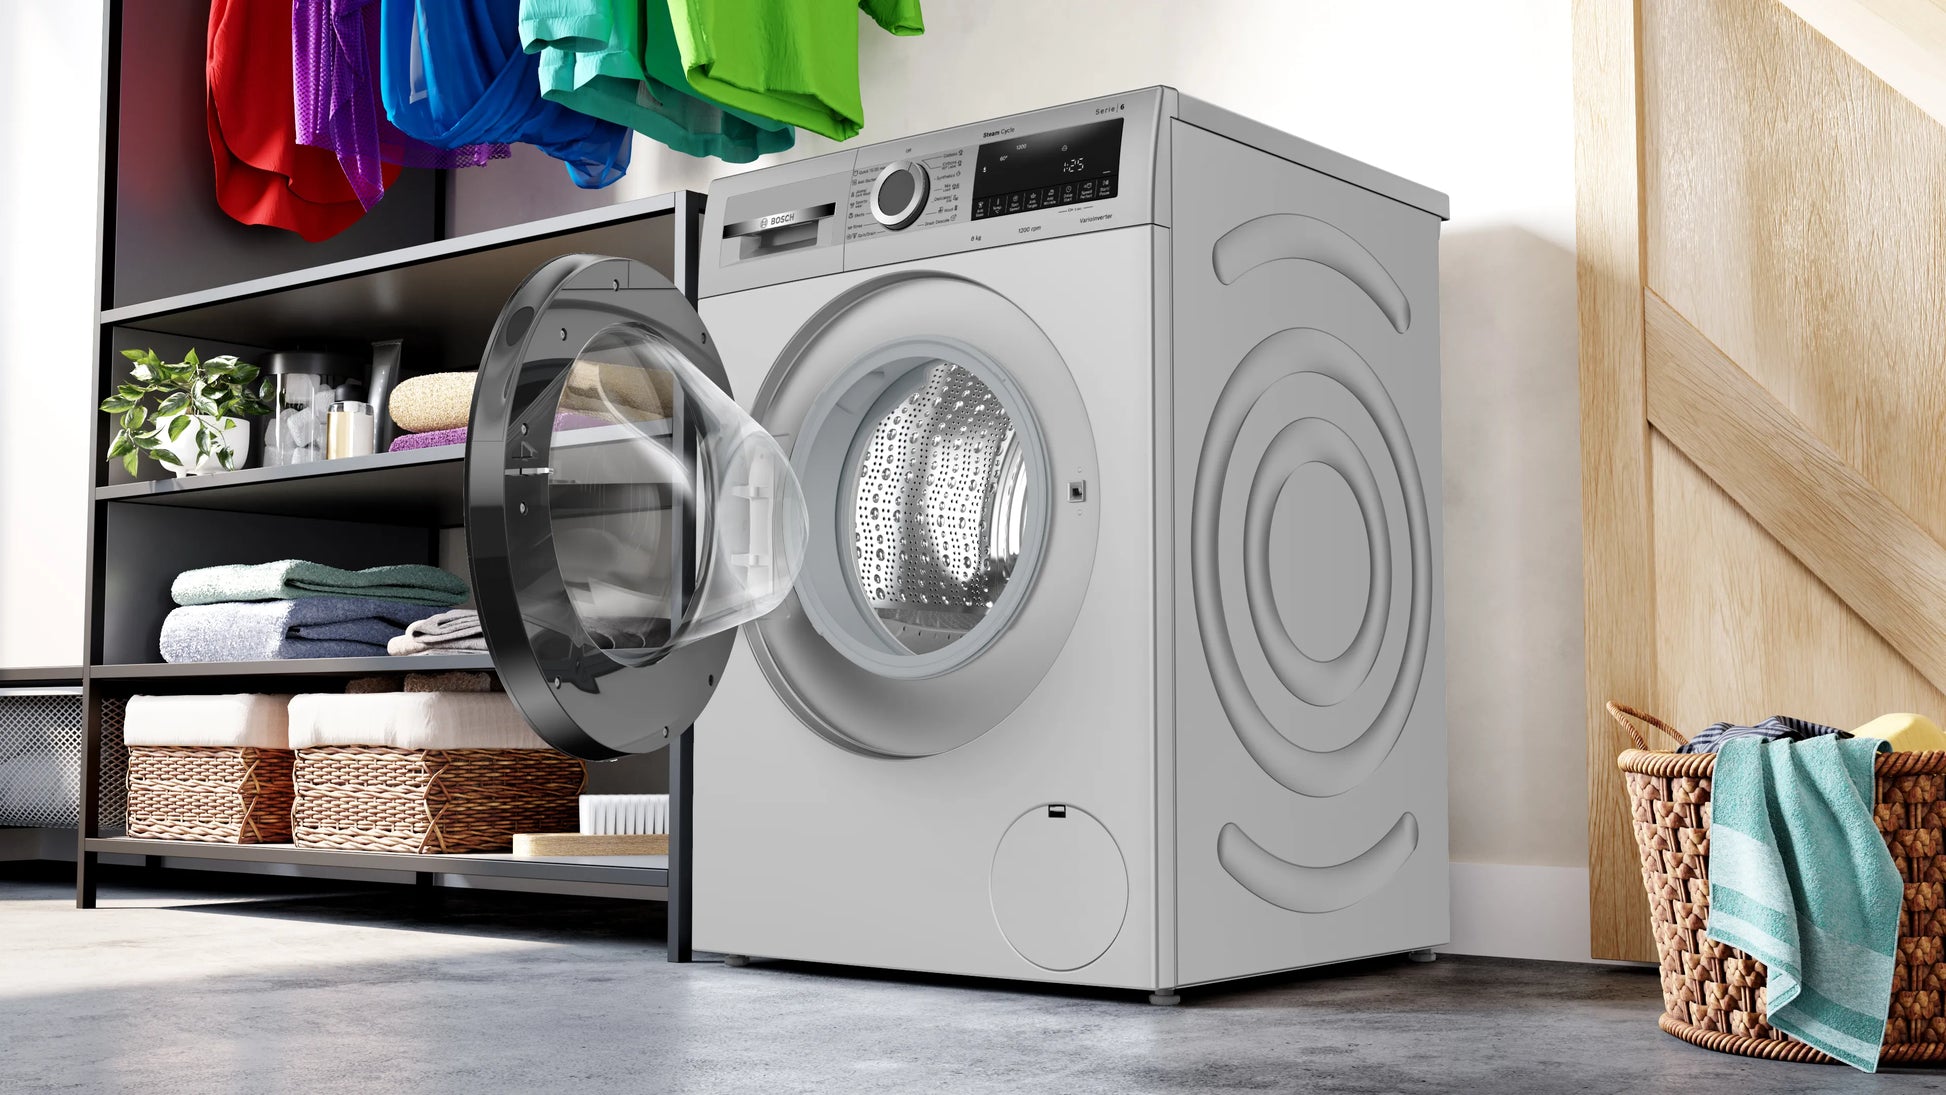 Bosch WGA1320SIN Series 6 washing machine, front loader 8 kg 1200 rpm Mahajan Electronics Online